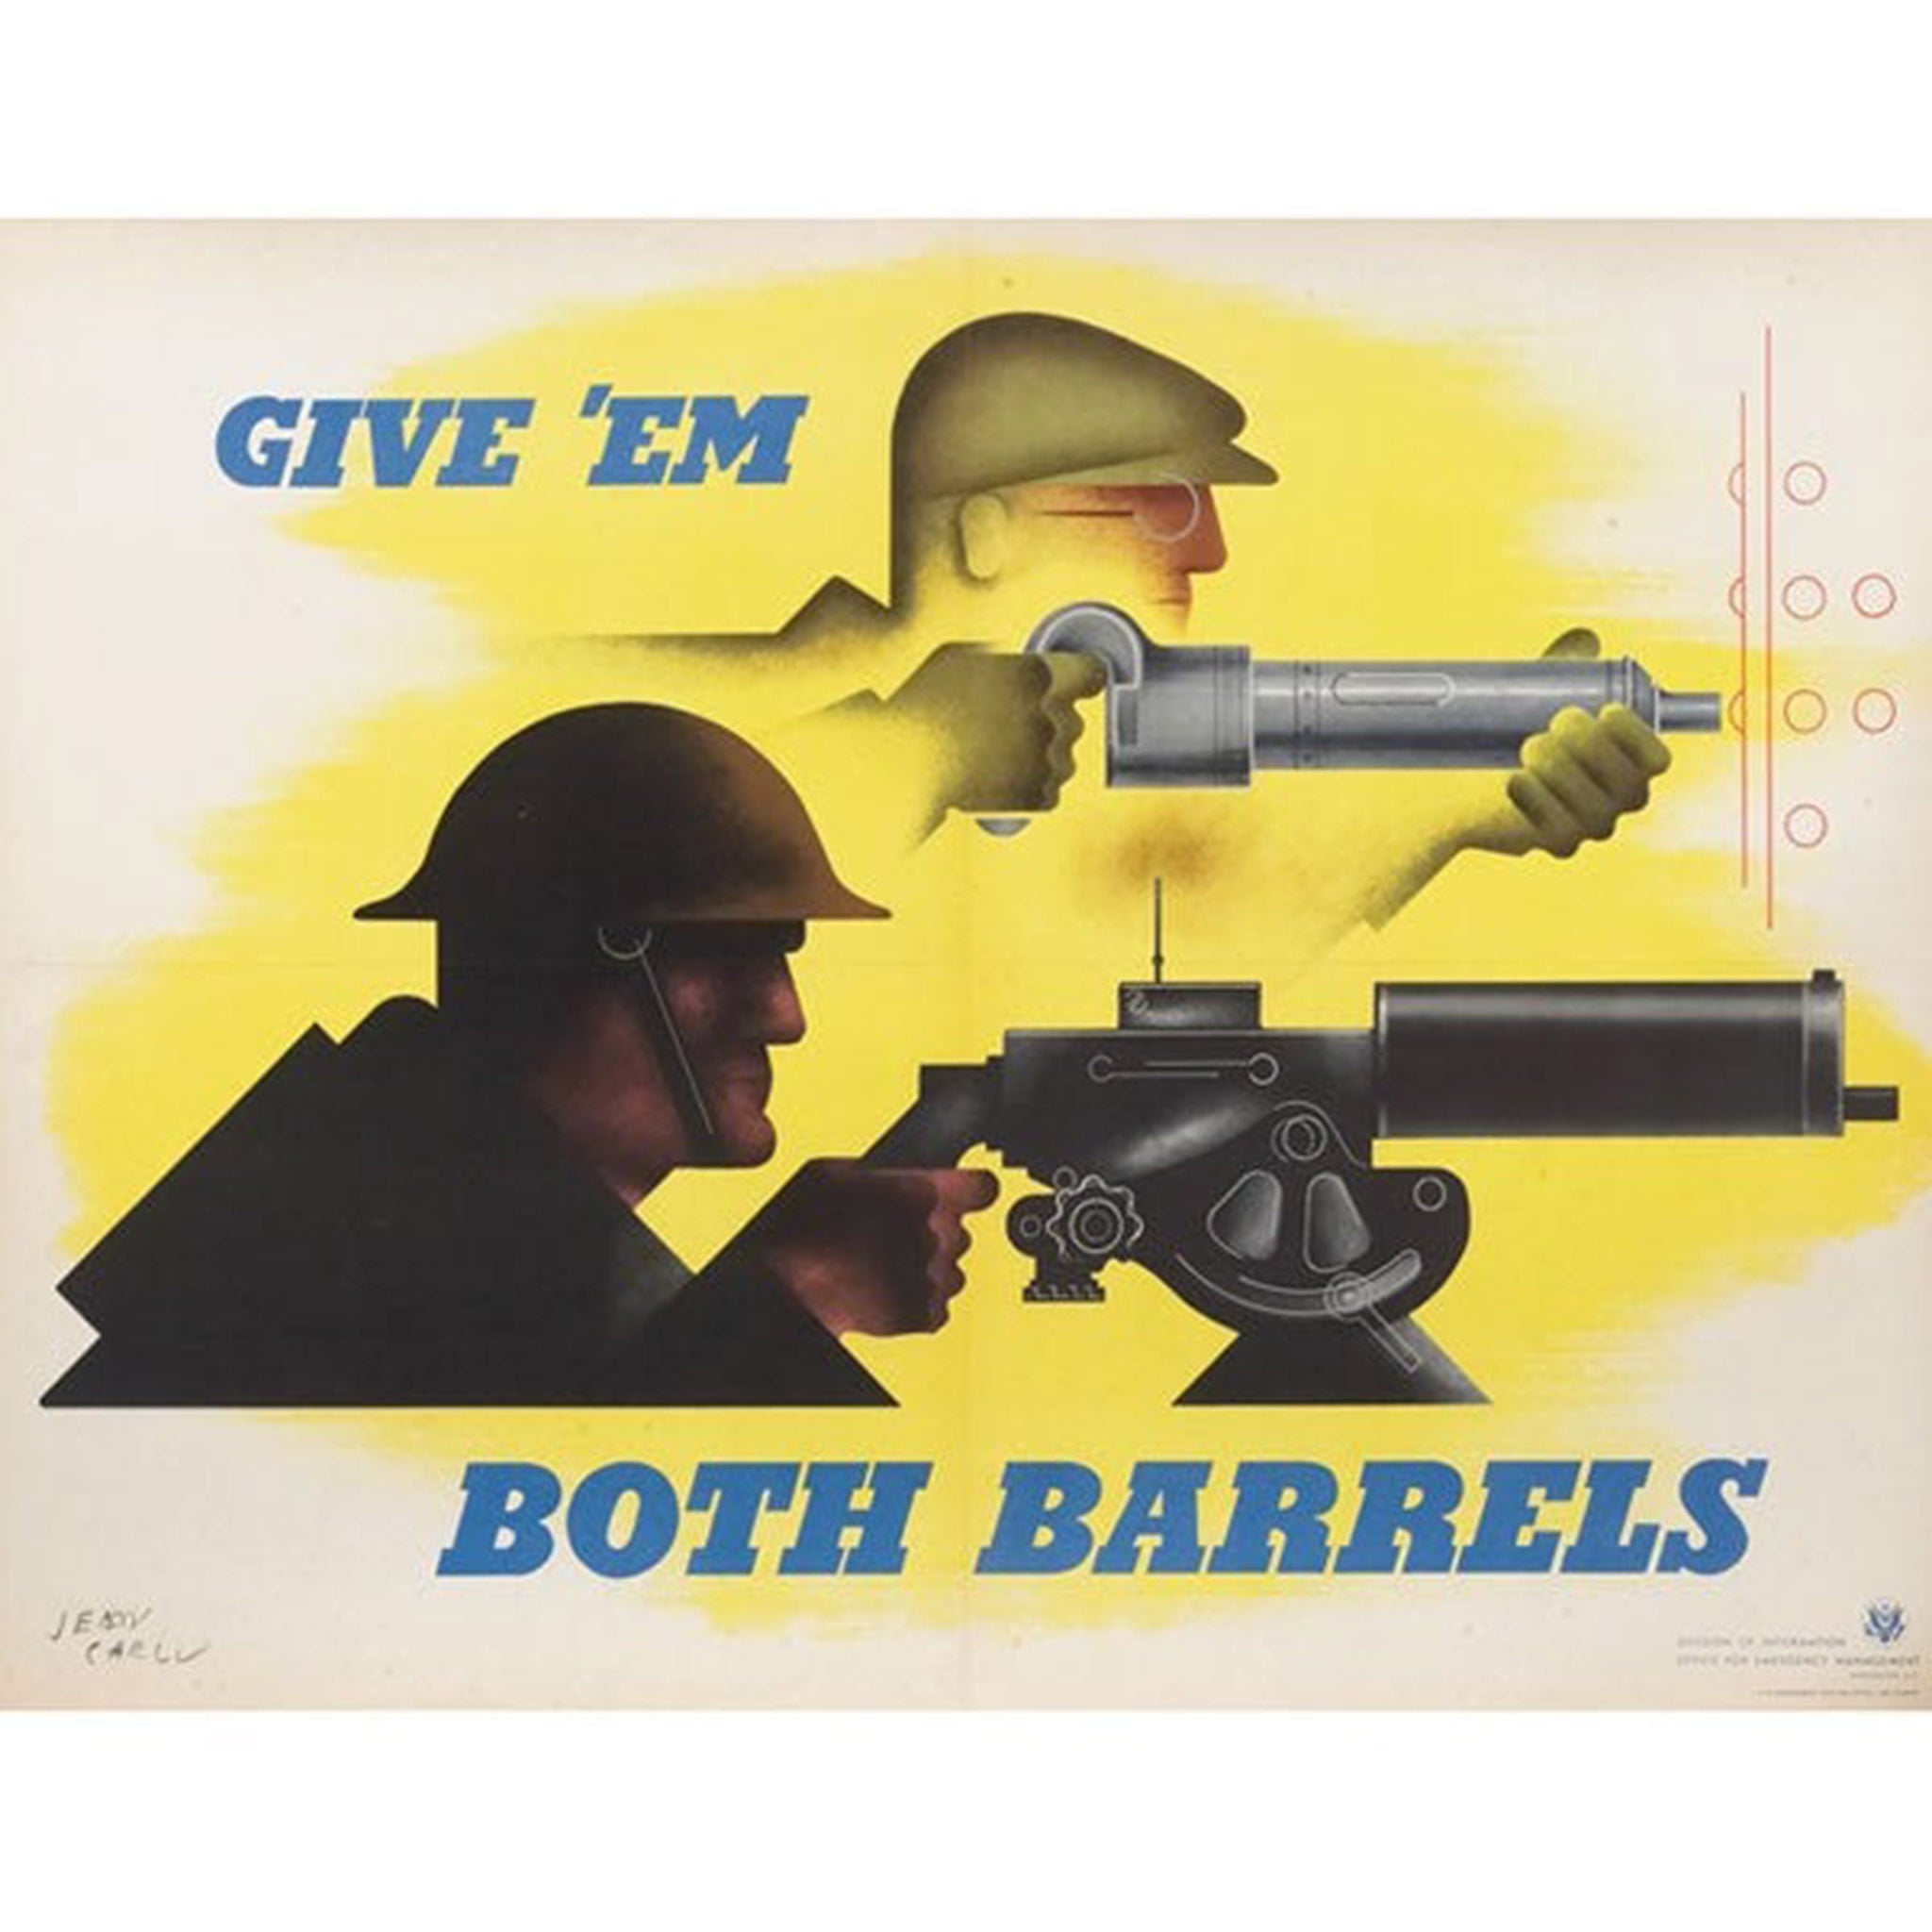 Give 'Em Both Barrels by Jean Carlu Original Poster